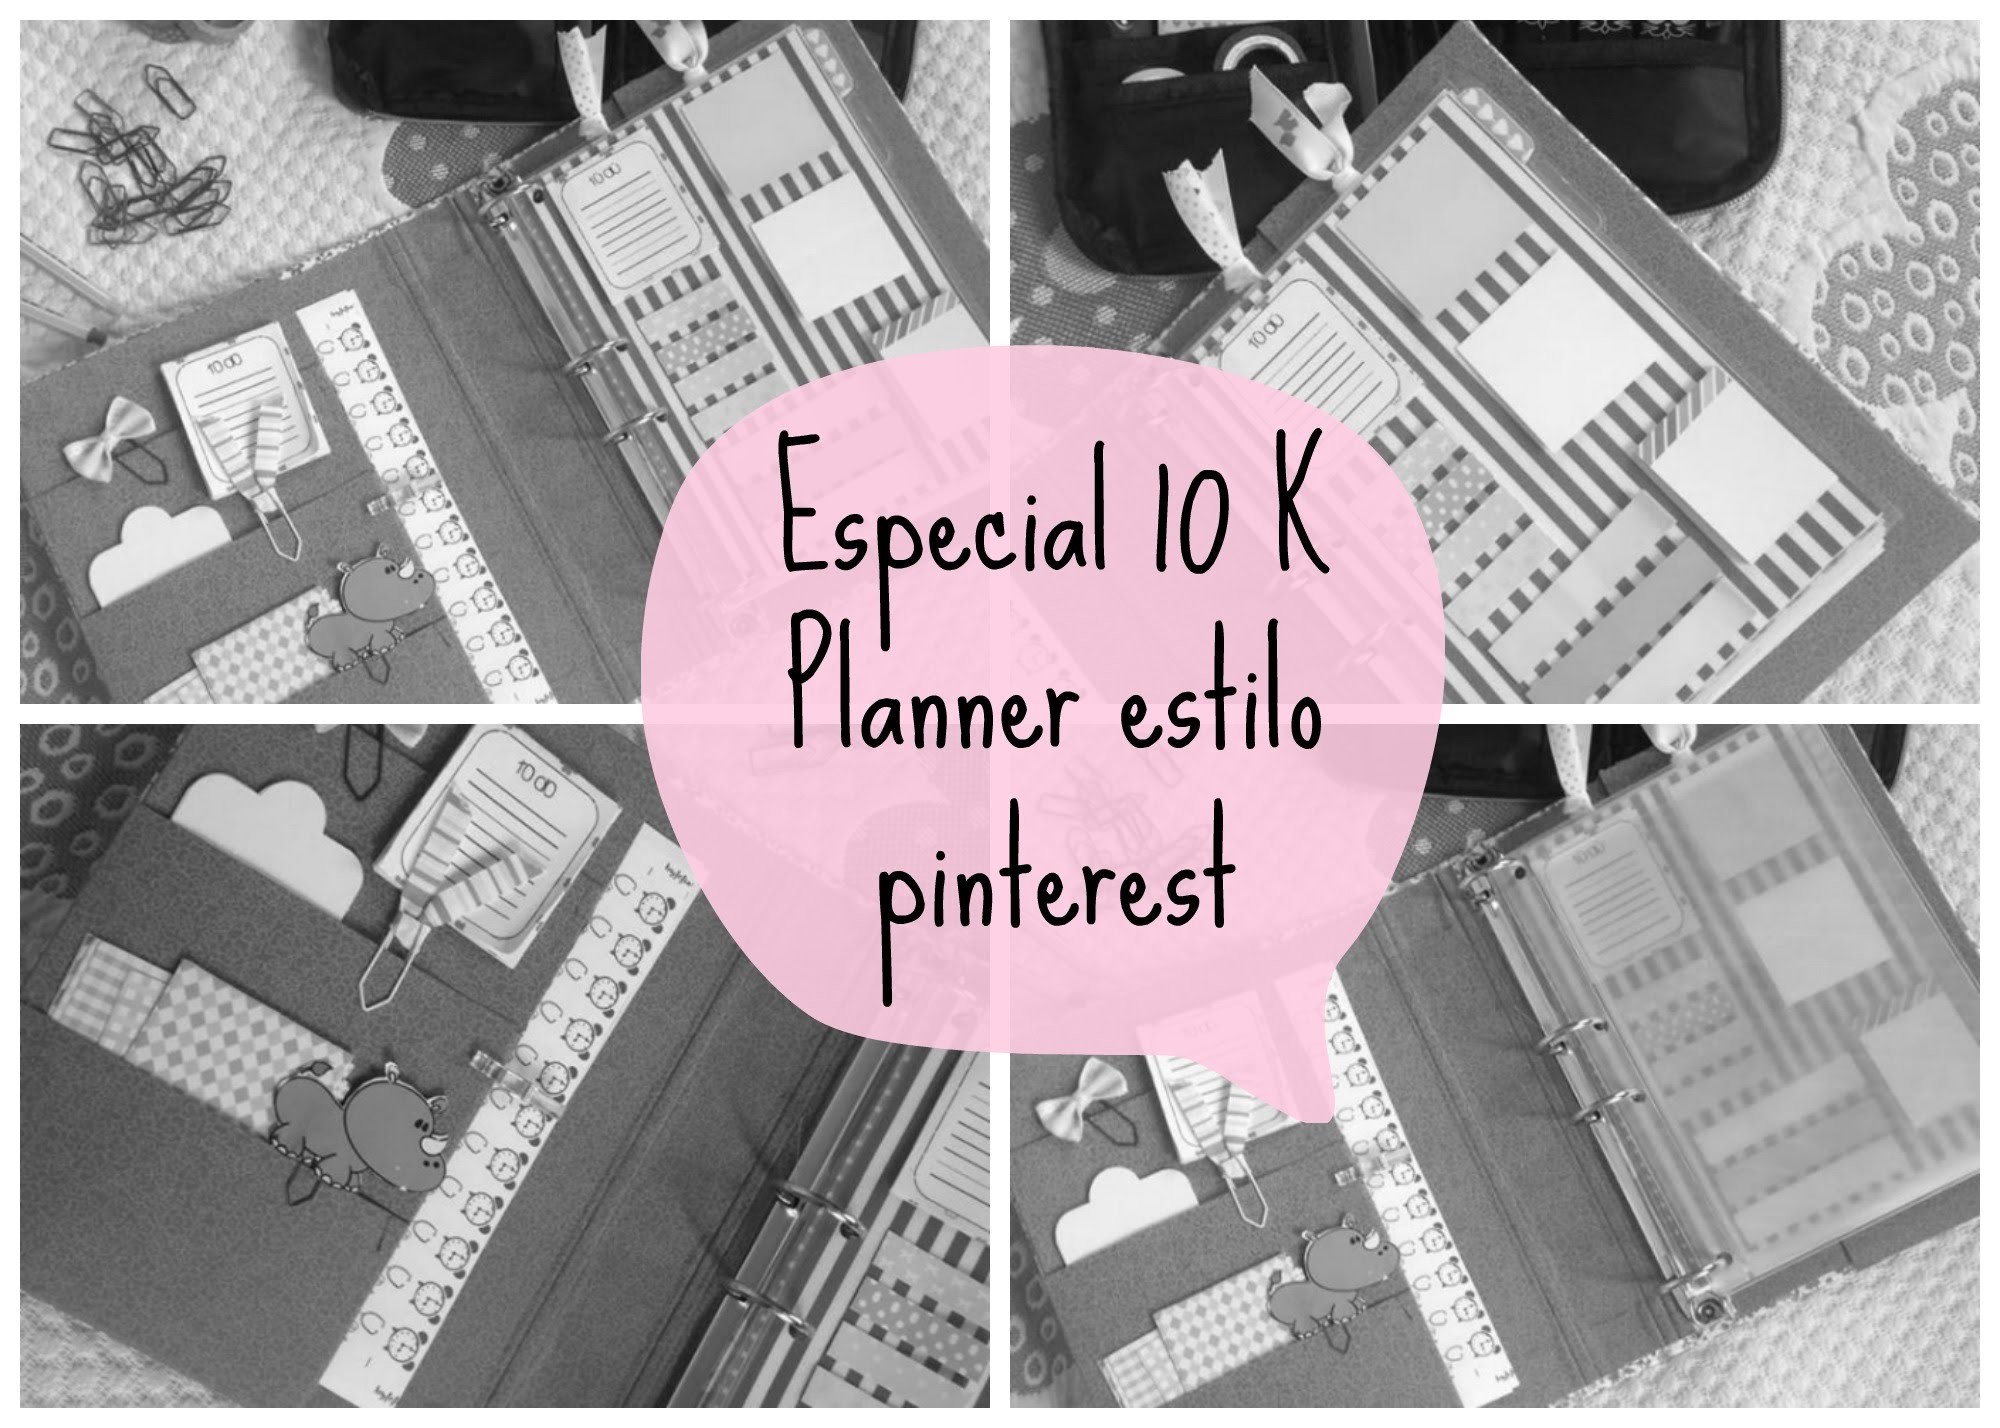 #especial10K | DIY planner estilo pinterest 06